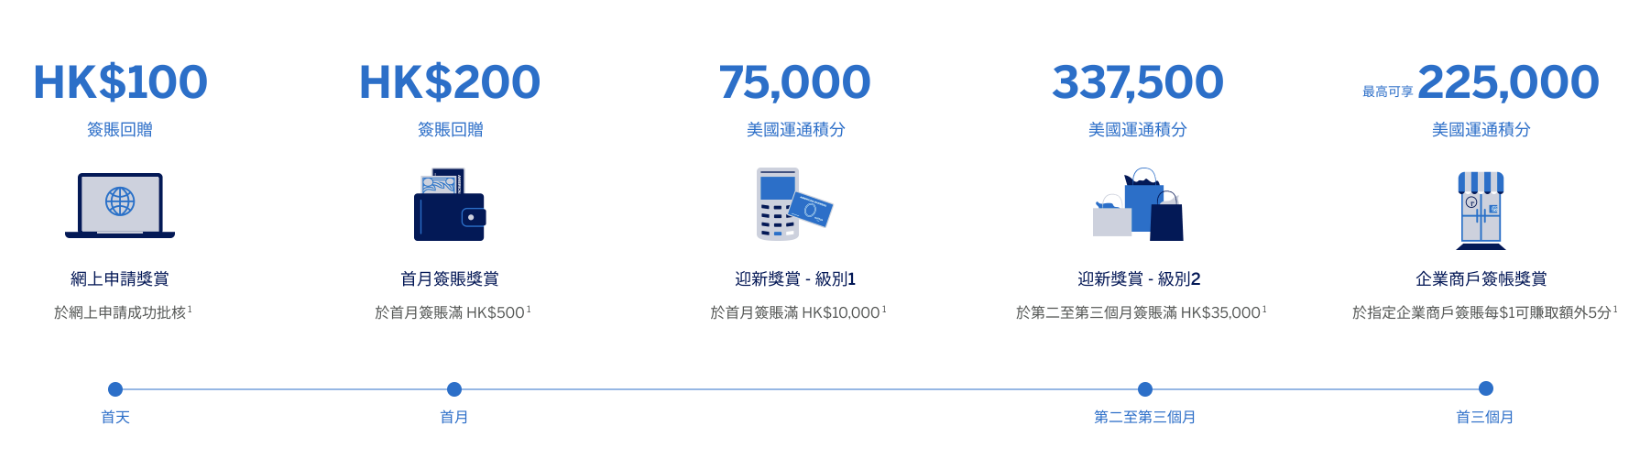 【AE金卡】[mn]月迎新新獎賞！經里先生成功申請送HK$500 Apple Gift Card或超市禮券＋迎新獎賞高達HK$2,900！首年免年費！